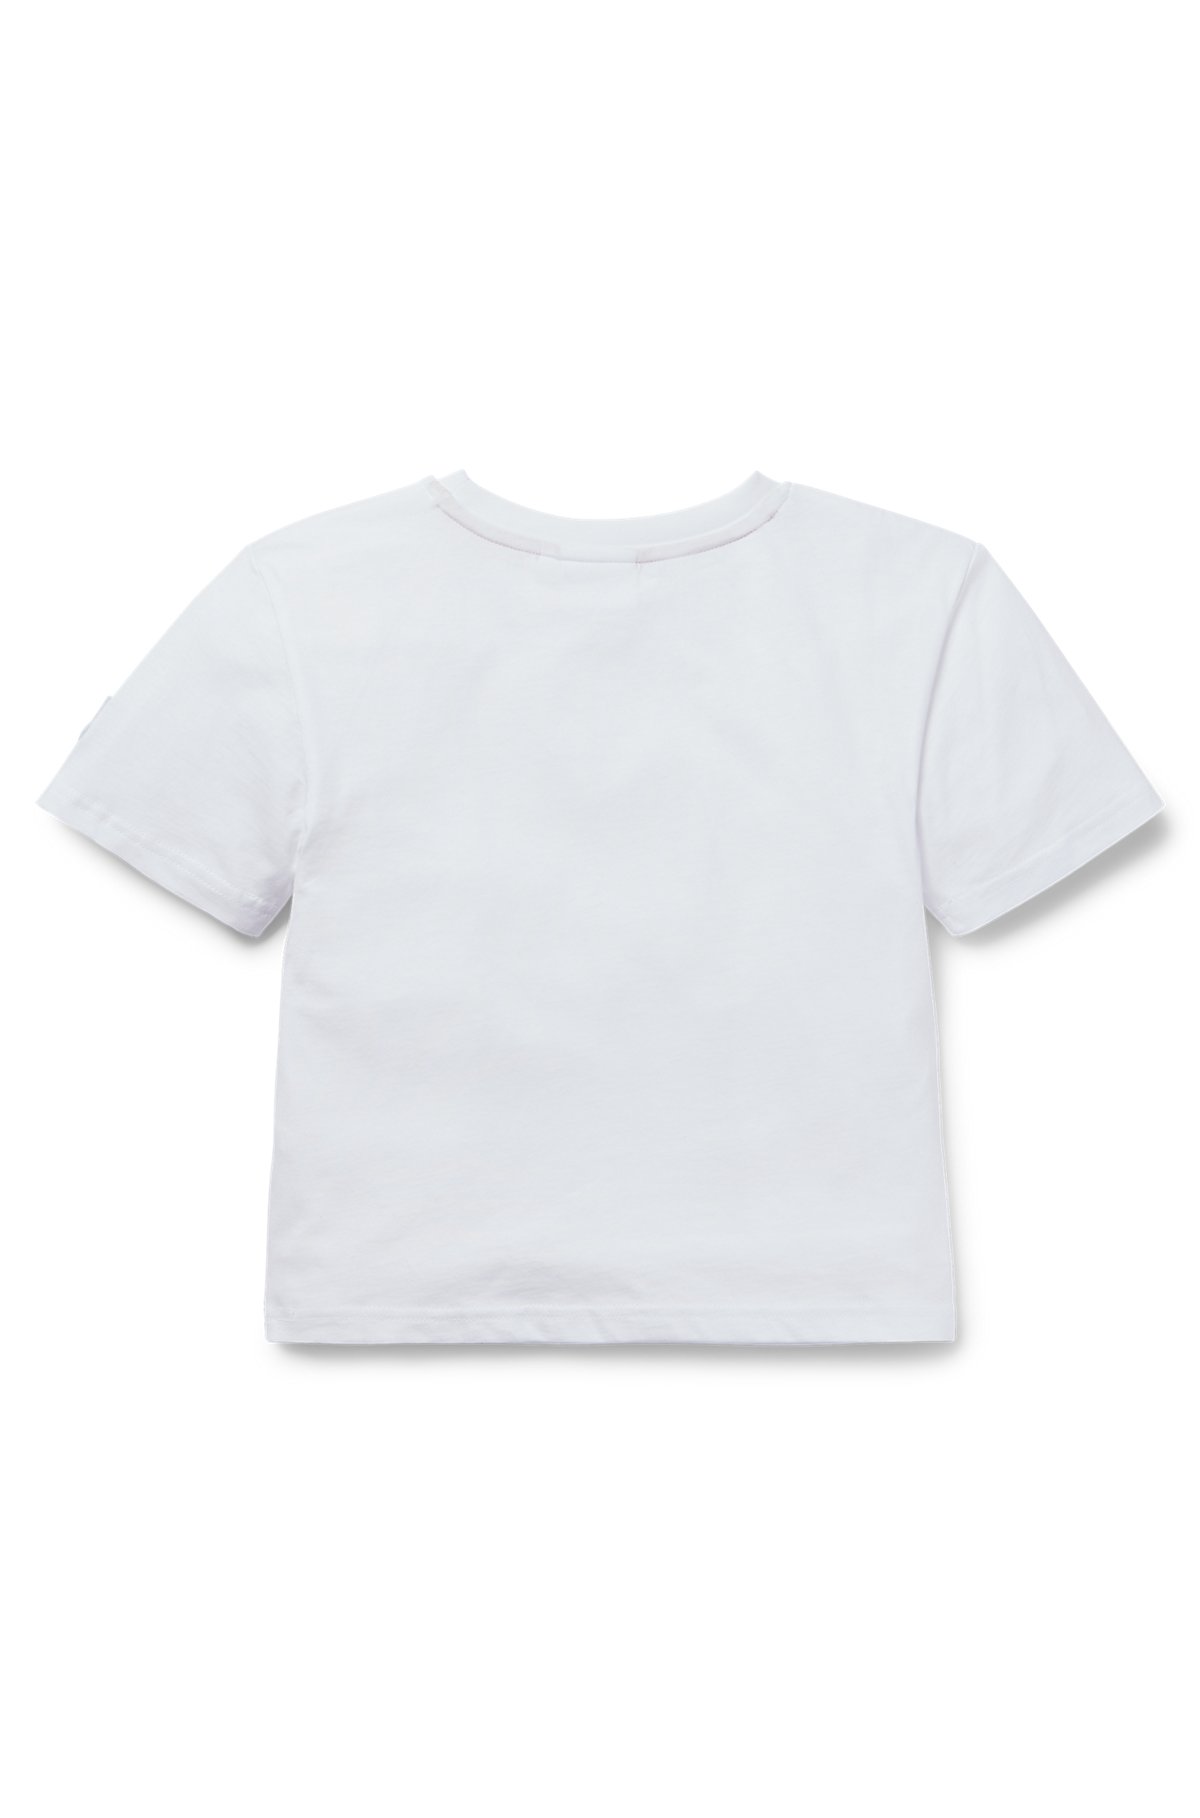 Kids' cotton T-shirt with logo artwork print, White